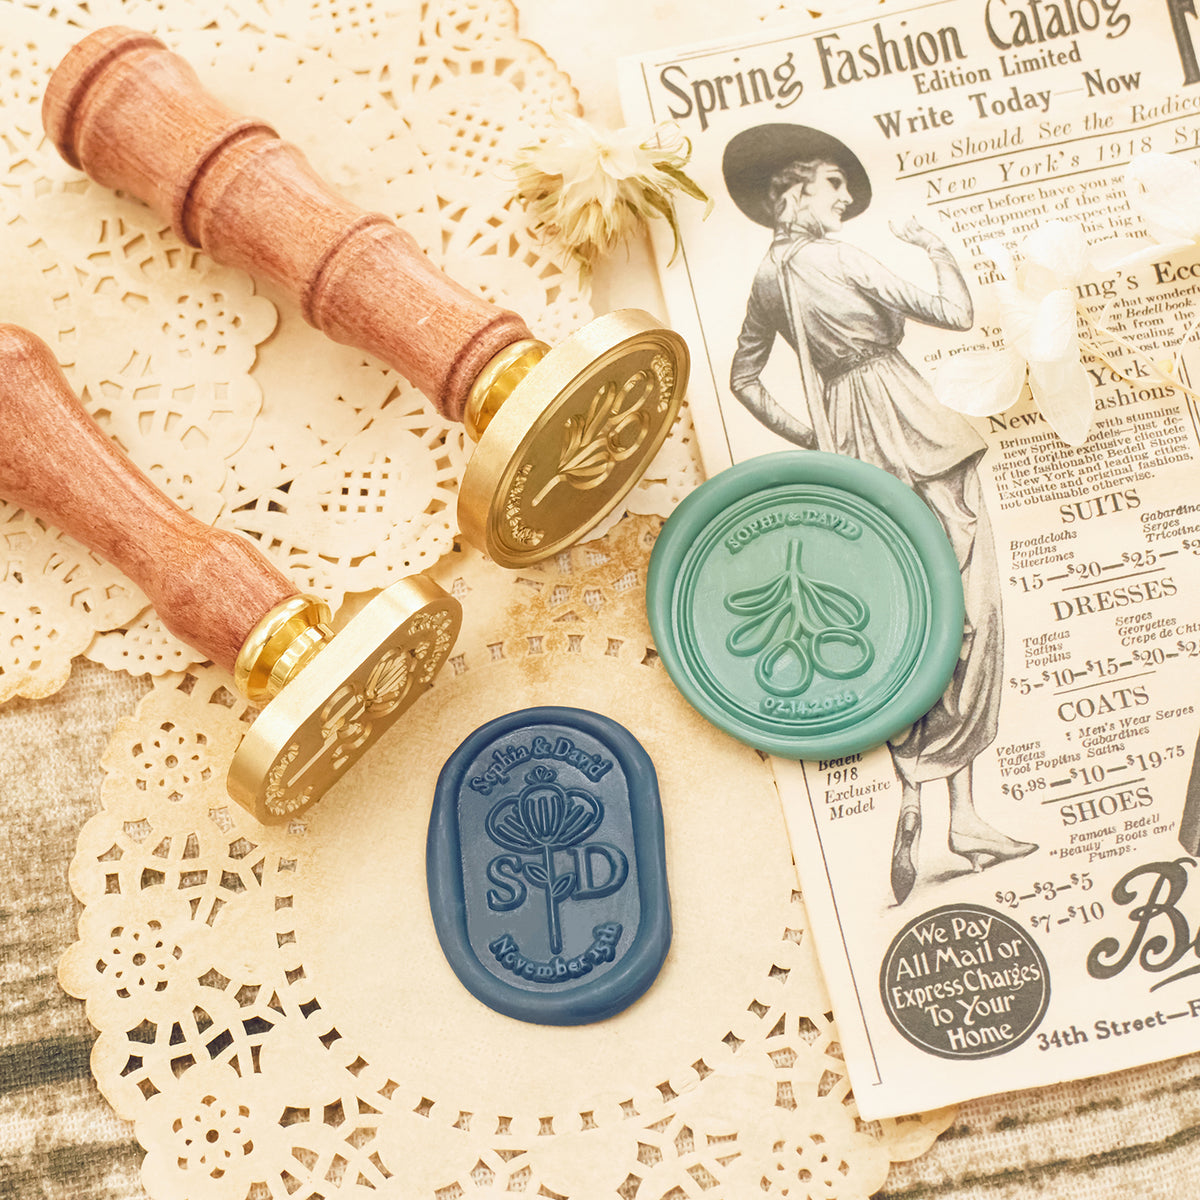 Custom Wax Seal Stamp - Custom Oval Wedding Wax Seal Stamp (27 Designs)